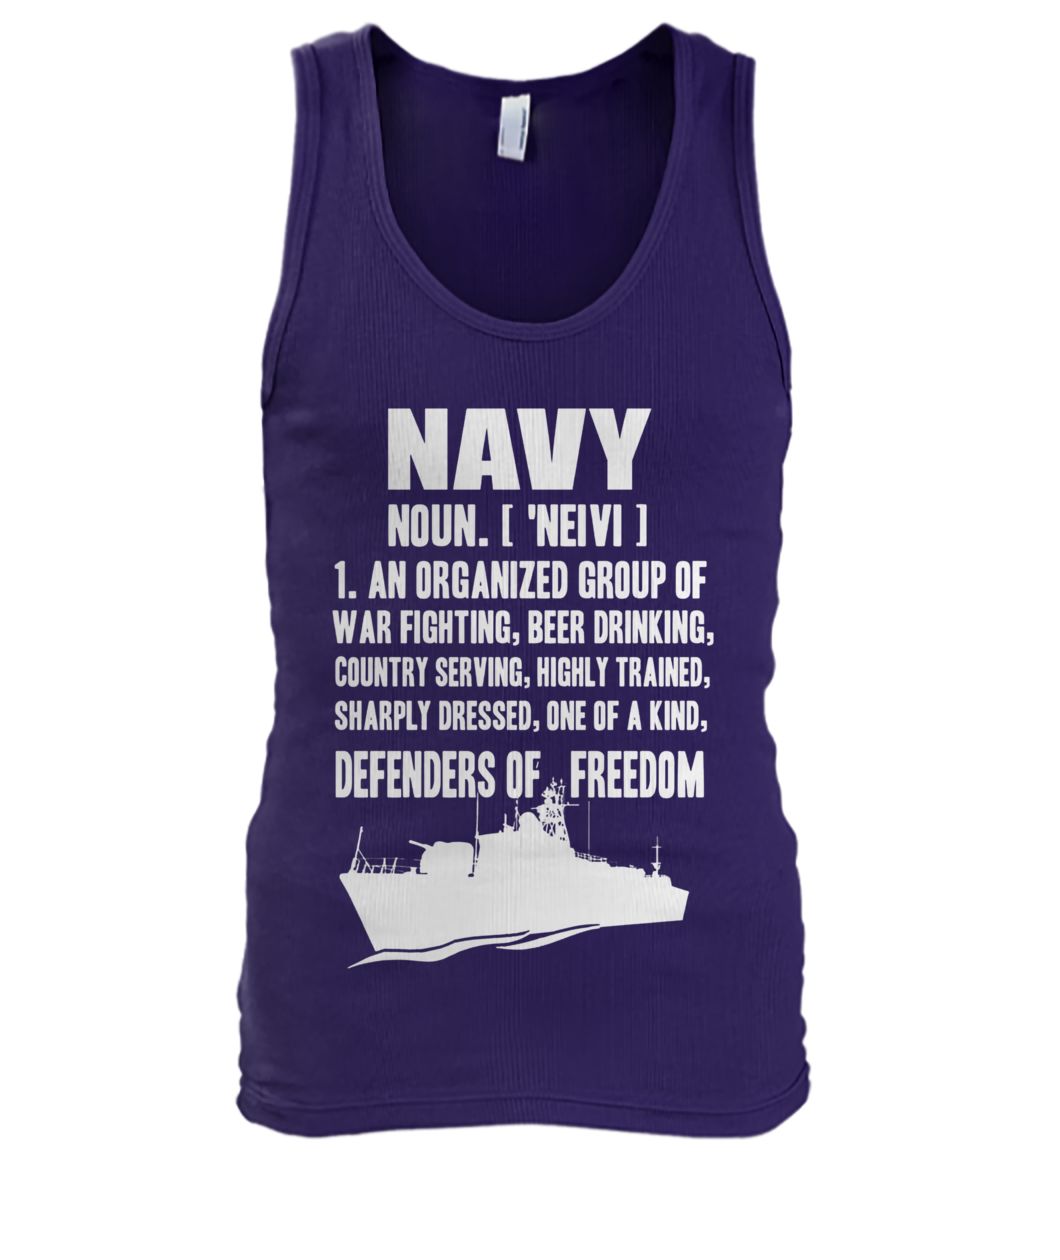 Navy definition men's tank top